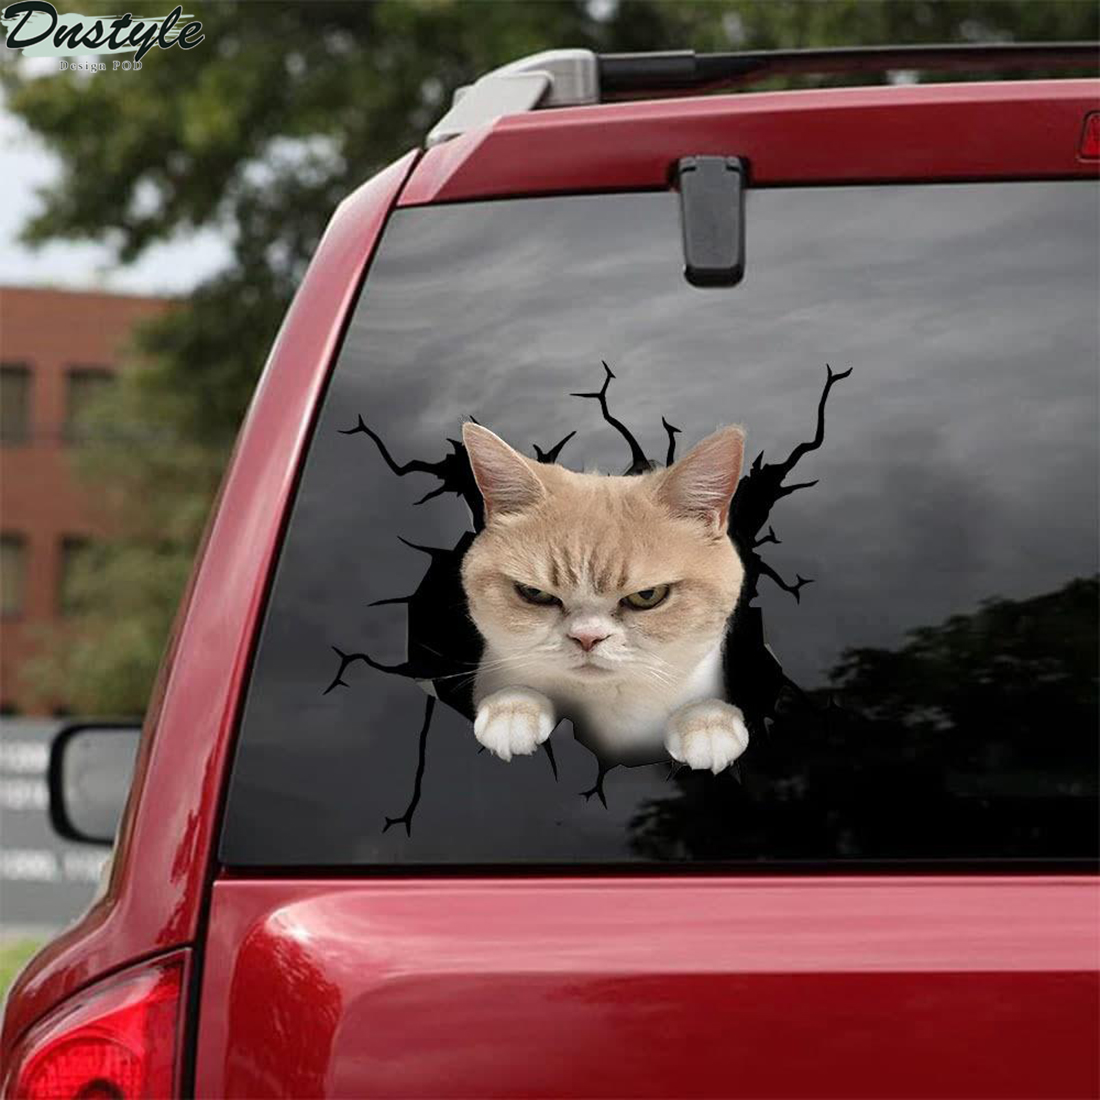 Grumpy cat car decal sticker 1